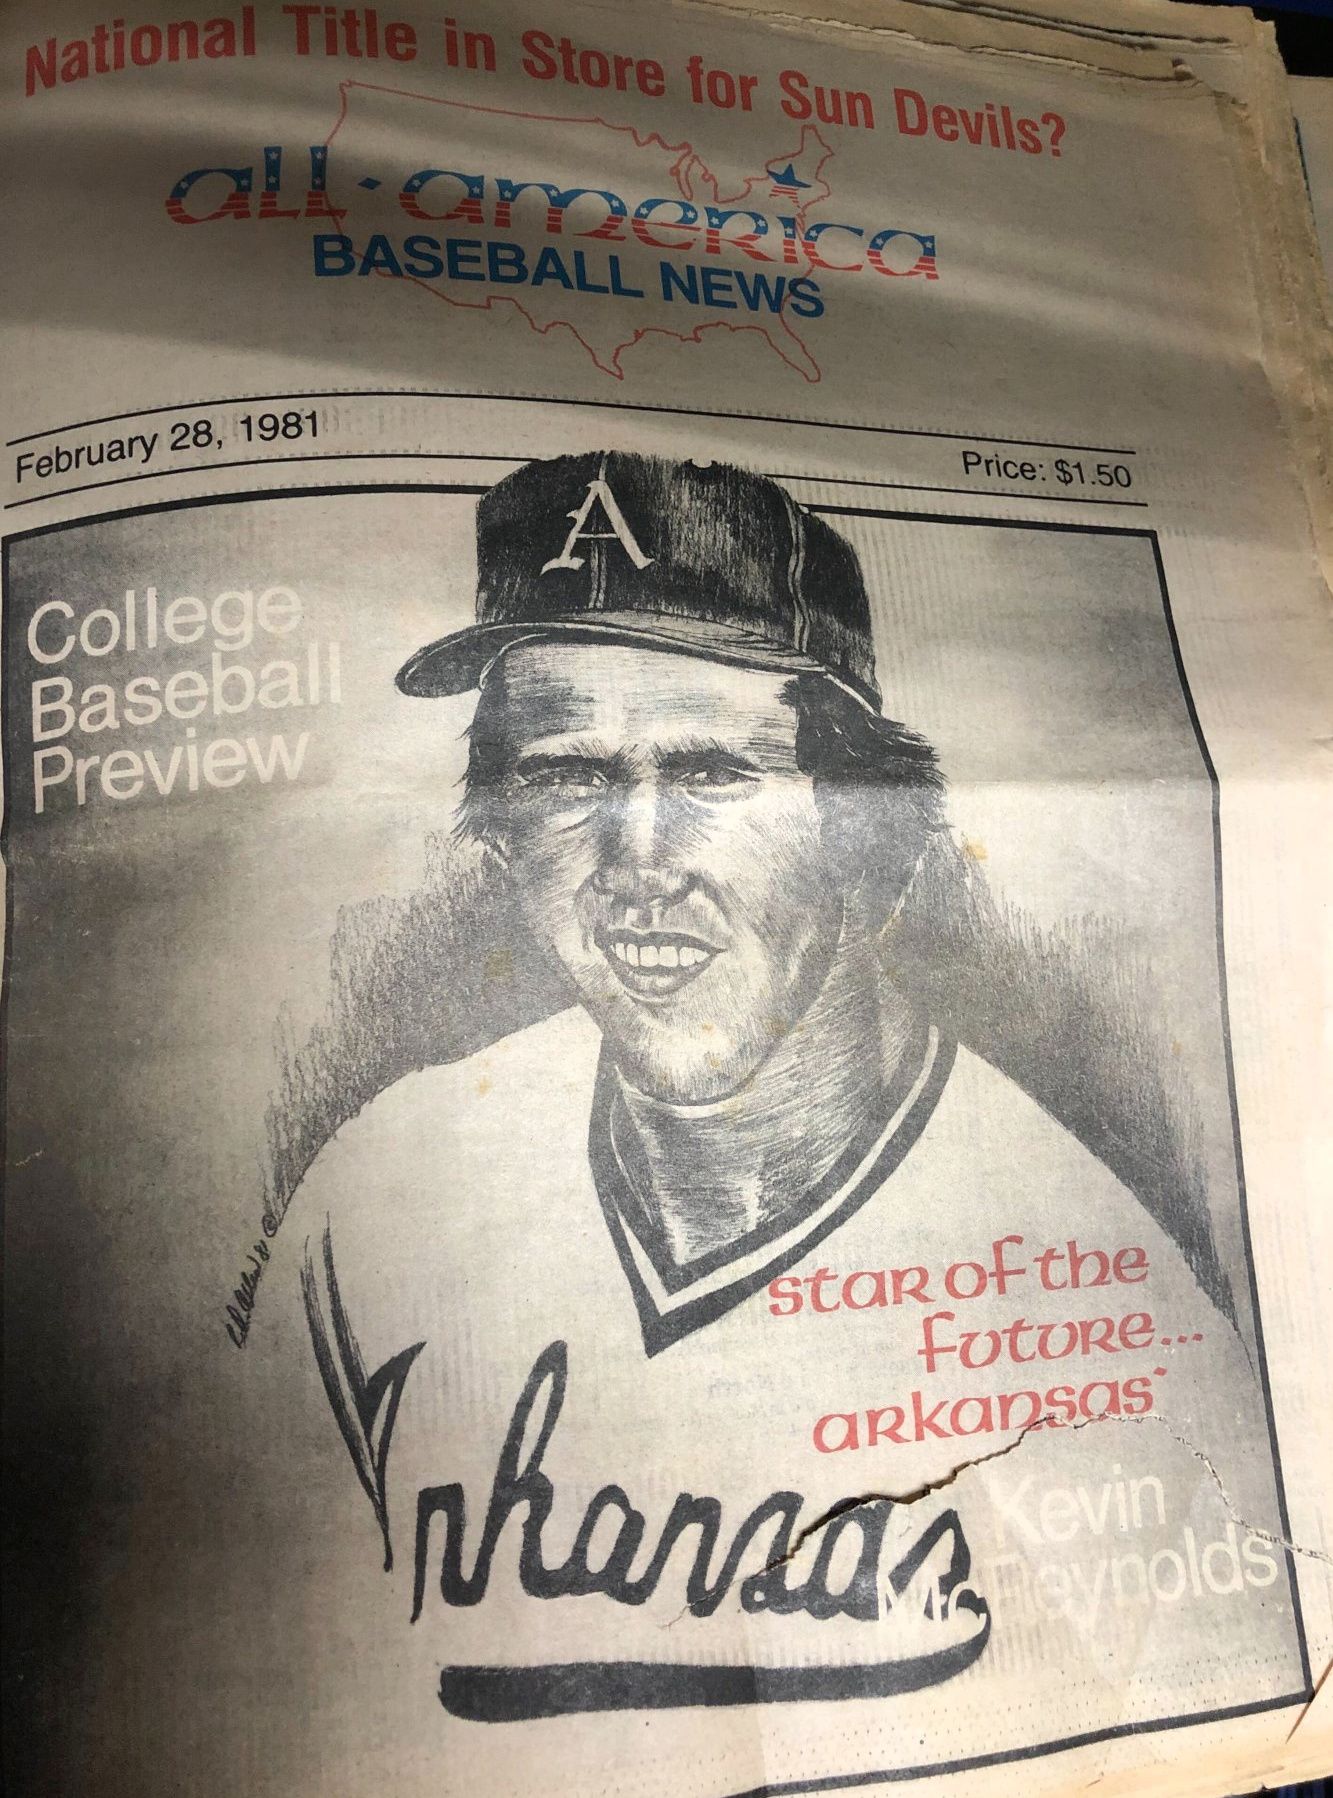 Baseball America's inaugural issue (COURTESY OF JJ COOPER)